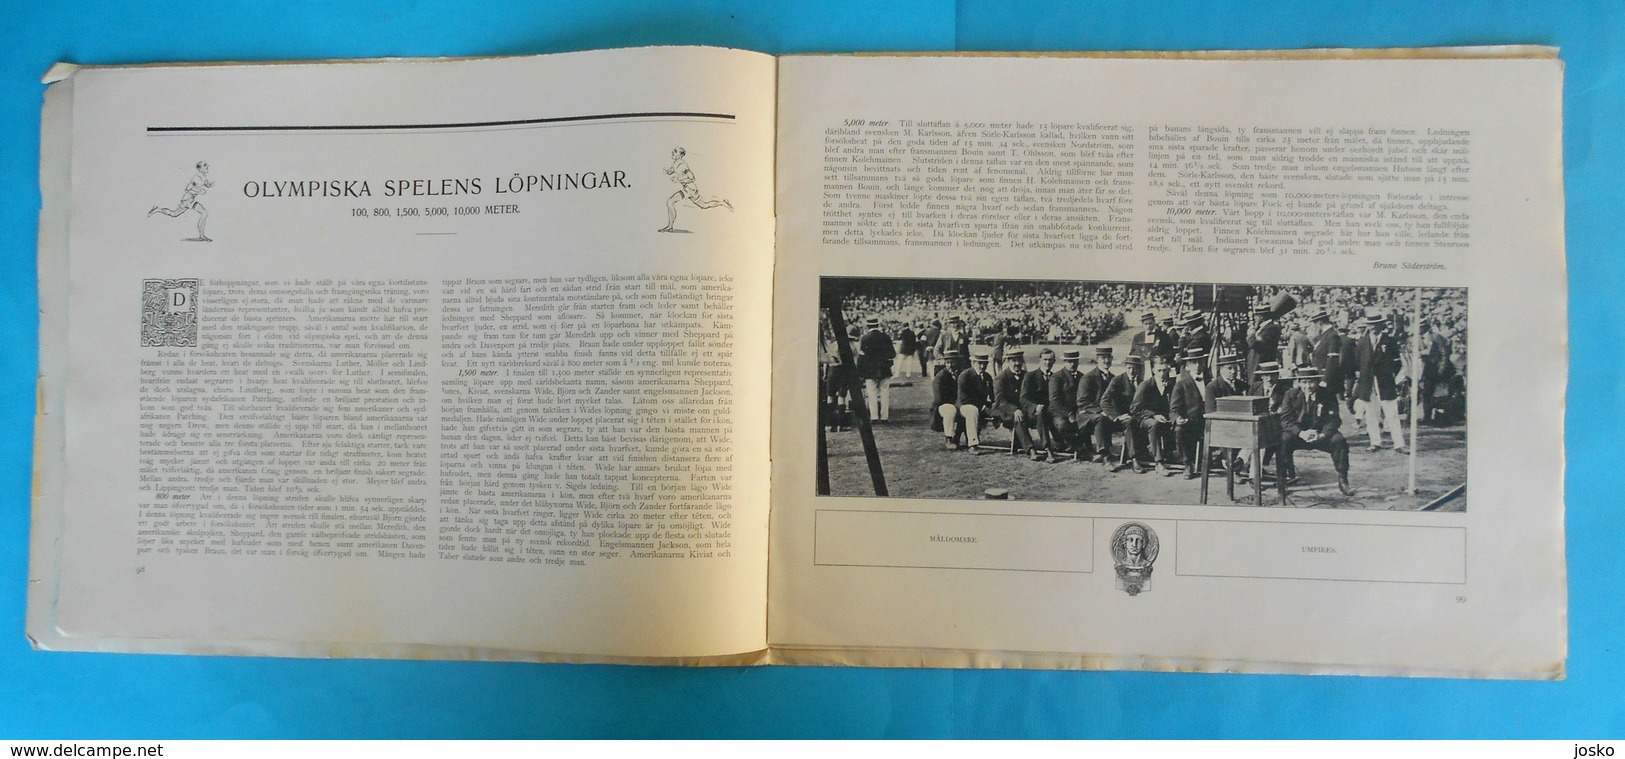 ATHLETICS On OLYMPIC GAMES 1912 STOCKHOLM - Original Vintage Programme * Athletisme Atletismo Atletica Athletik Athletic - Libri